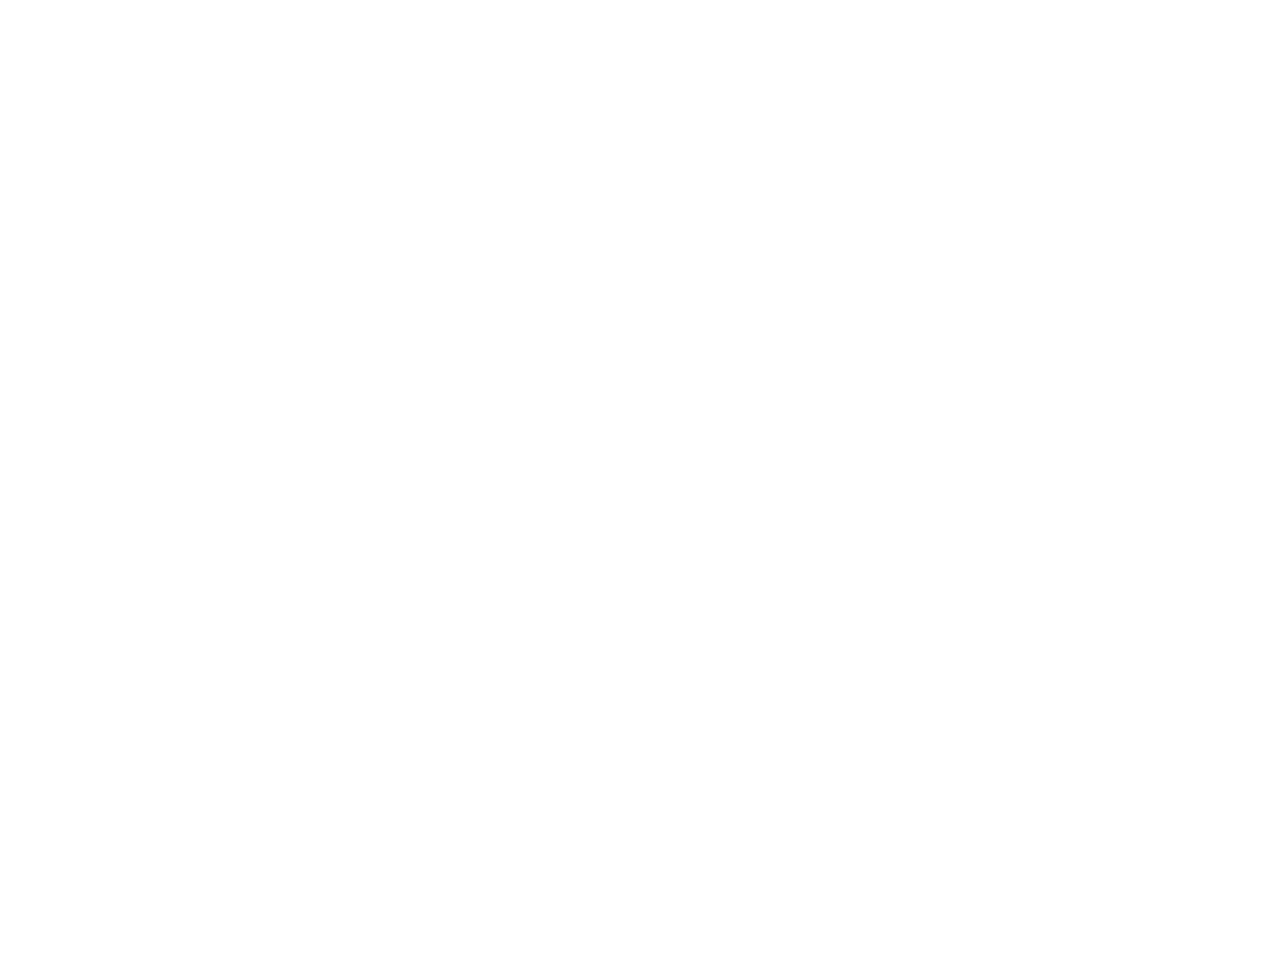 Affordable. Stylish. Custom.